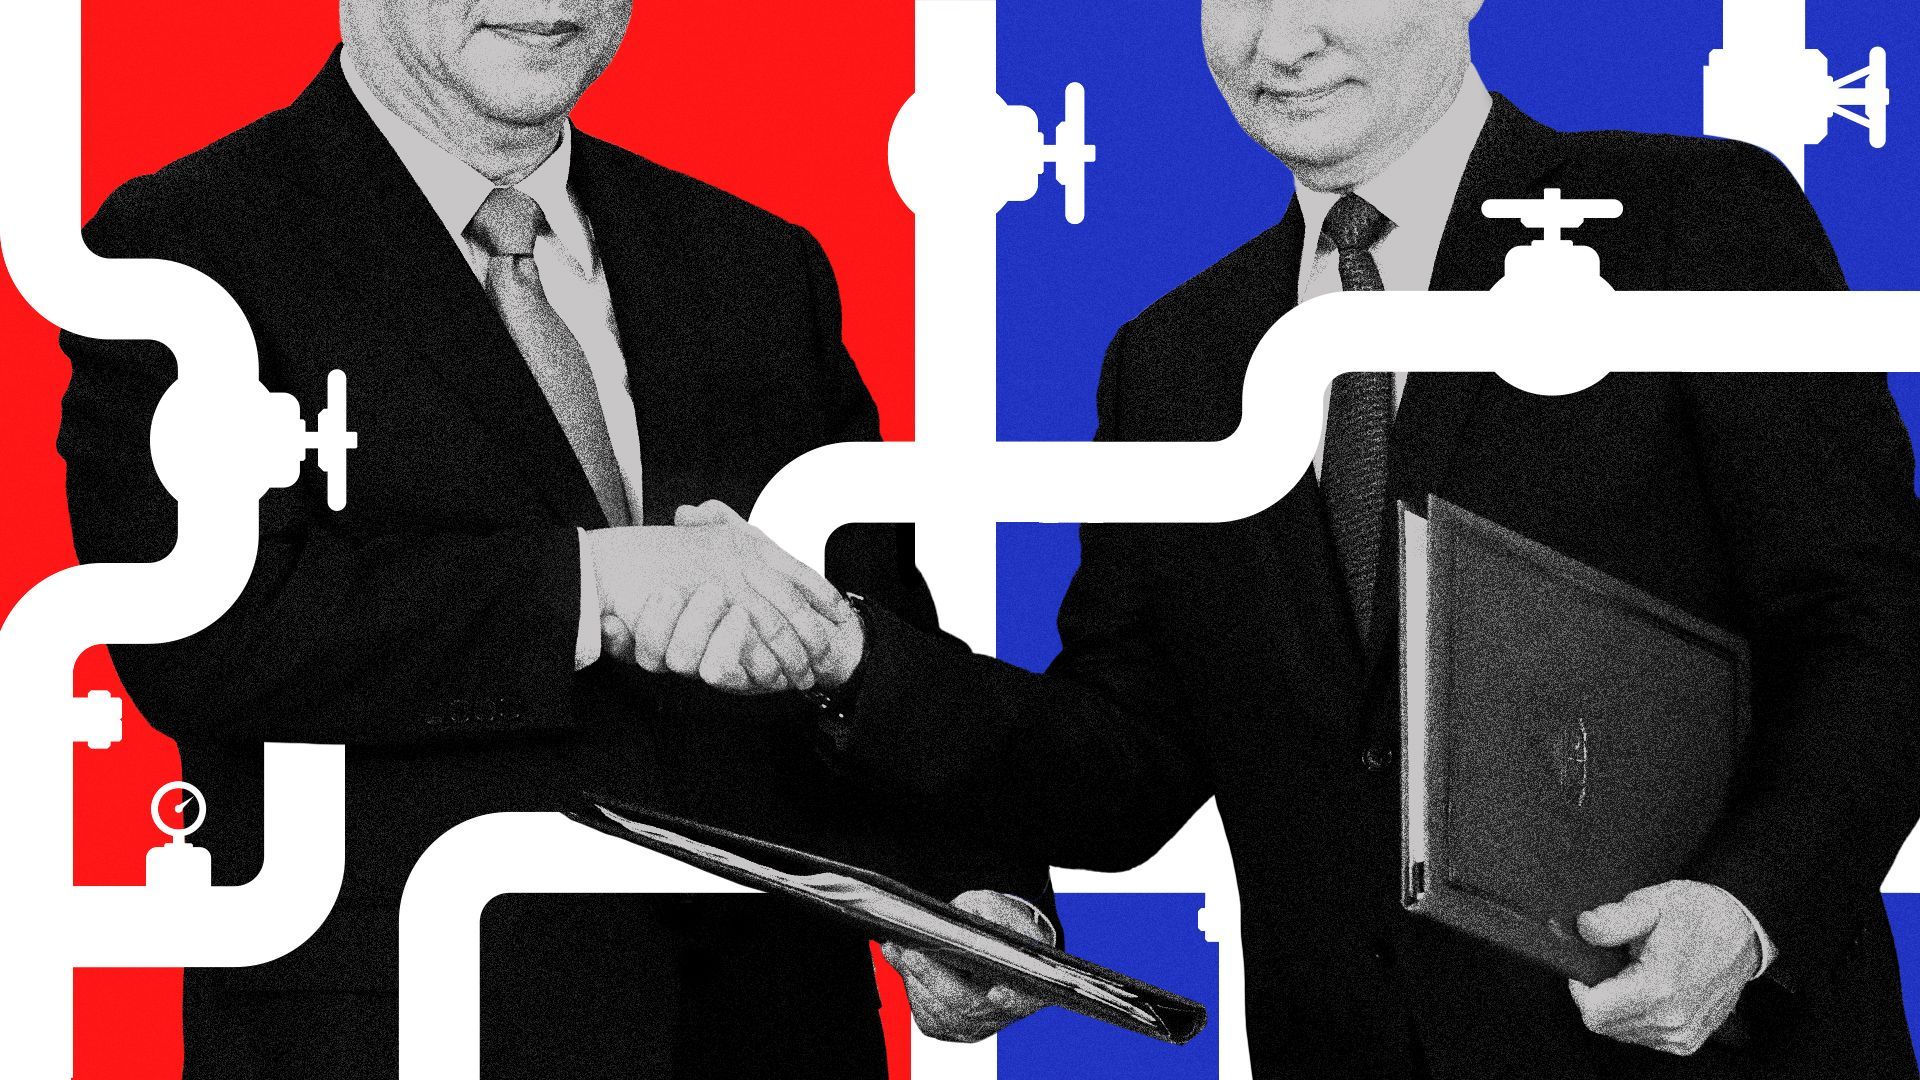 Photo illustration of pipelines encircling Xi Jinping and Vladimir Putin shaking hands.